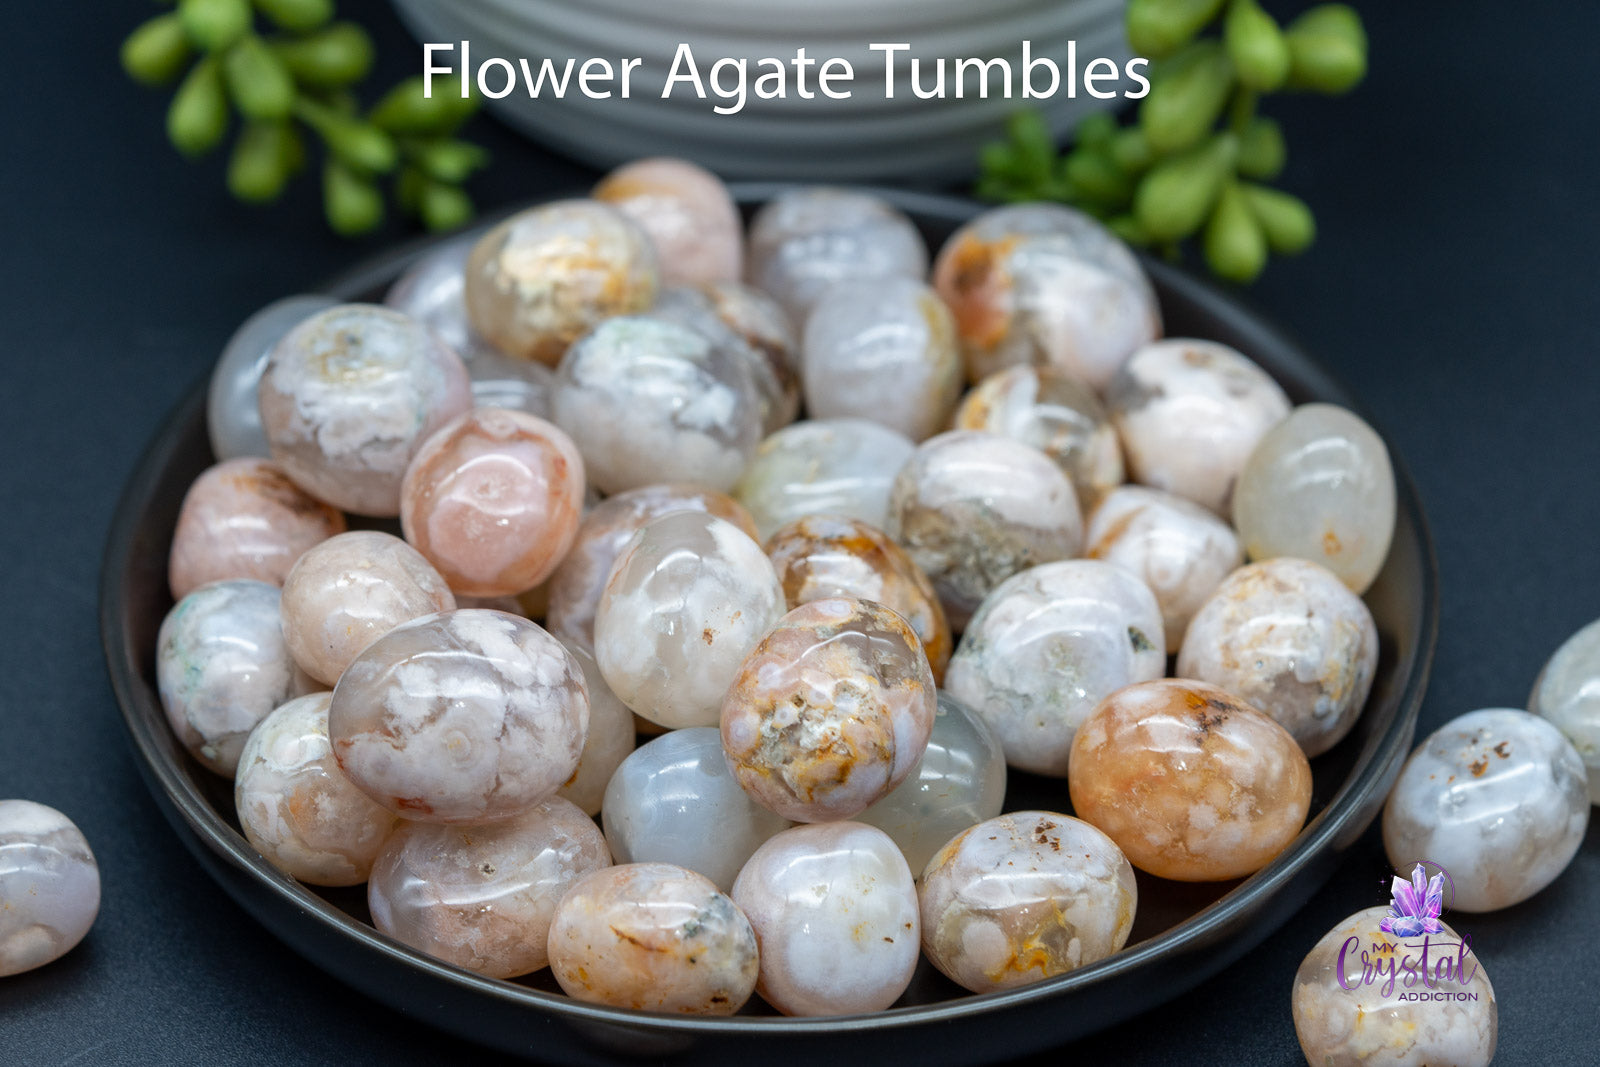 Flower Agate Tumbles - My Crystal Addiction